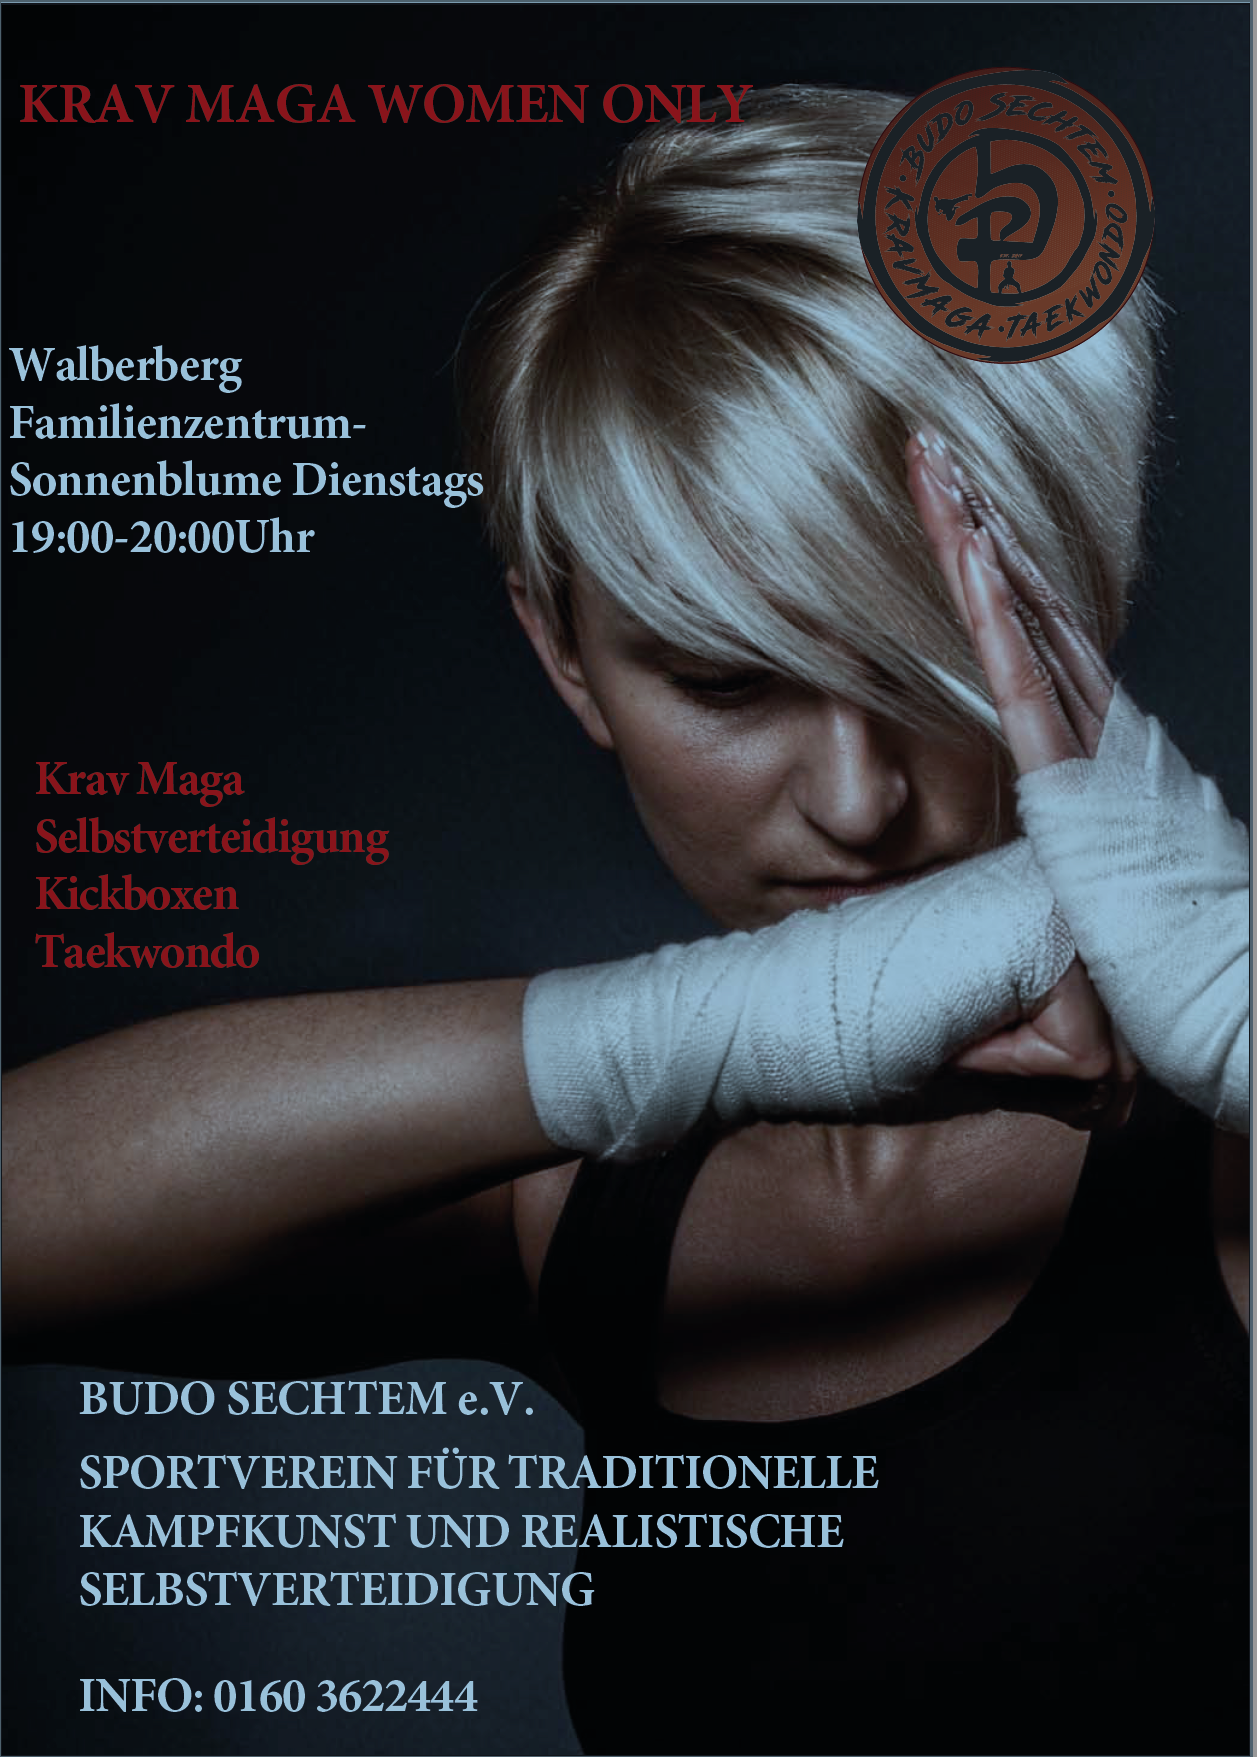 Budo Sechtem - Frauen Selbstverteidigungsgruppe ein voller Erfolg - Plakat